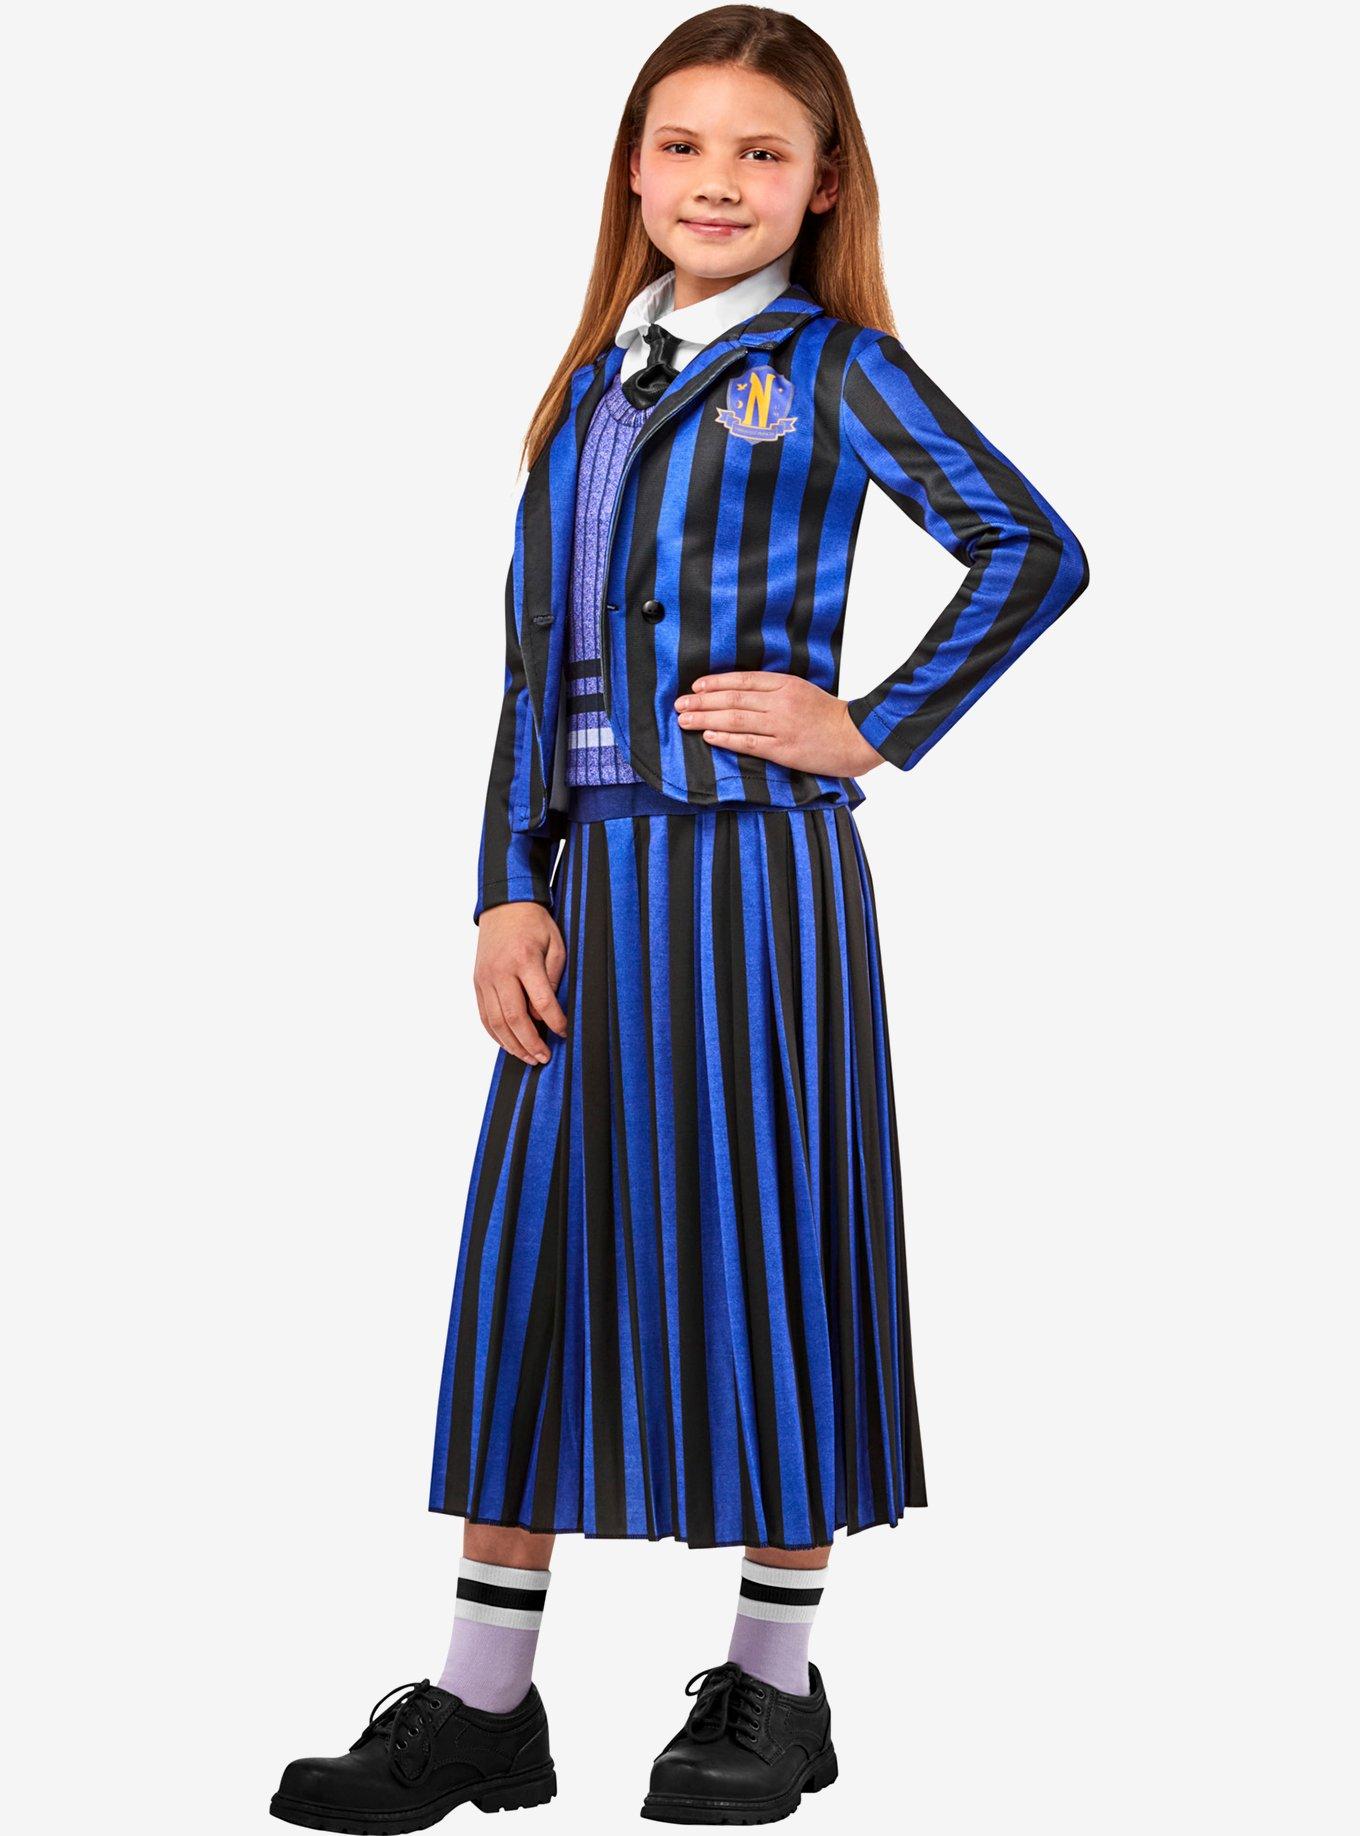 Wednesday Nevermore Academy Uniform Youth Costume, BLUE STRIPE, hi-res